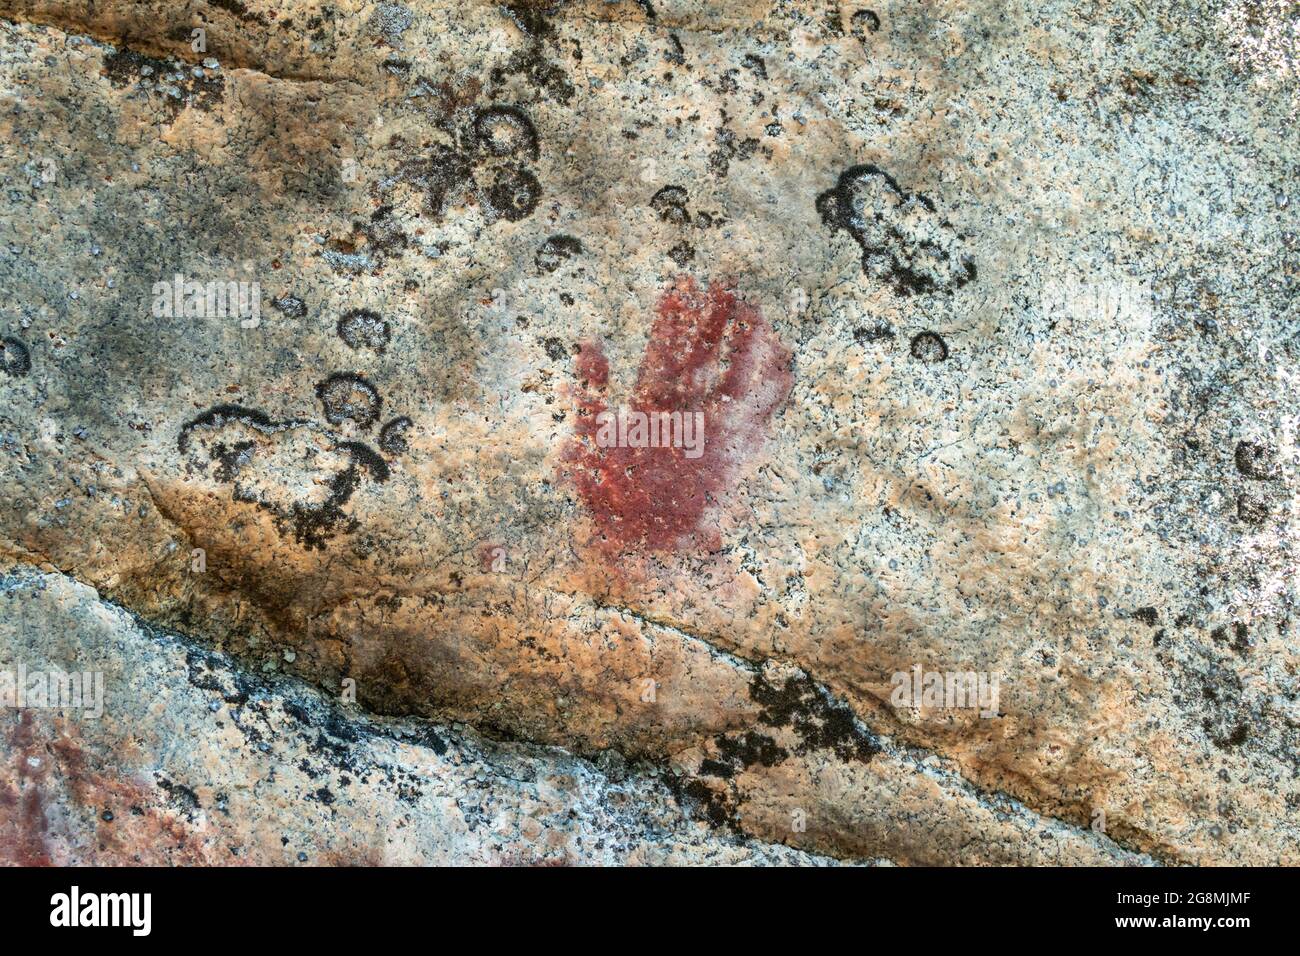 Human hand , one of Astuvansalmi rock paintings, in Ristiina, Finland Stock Photo